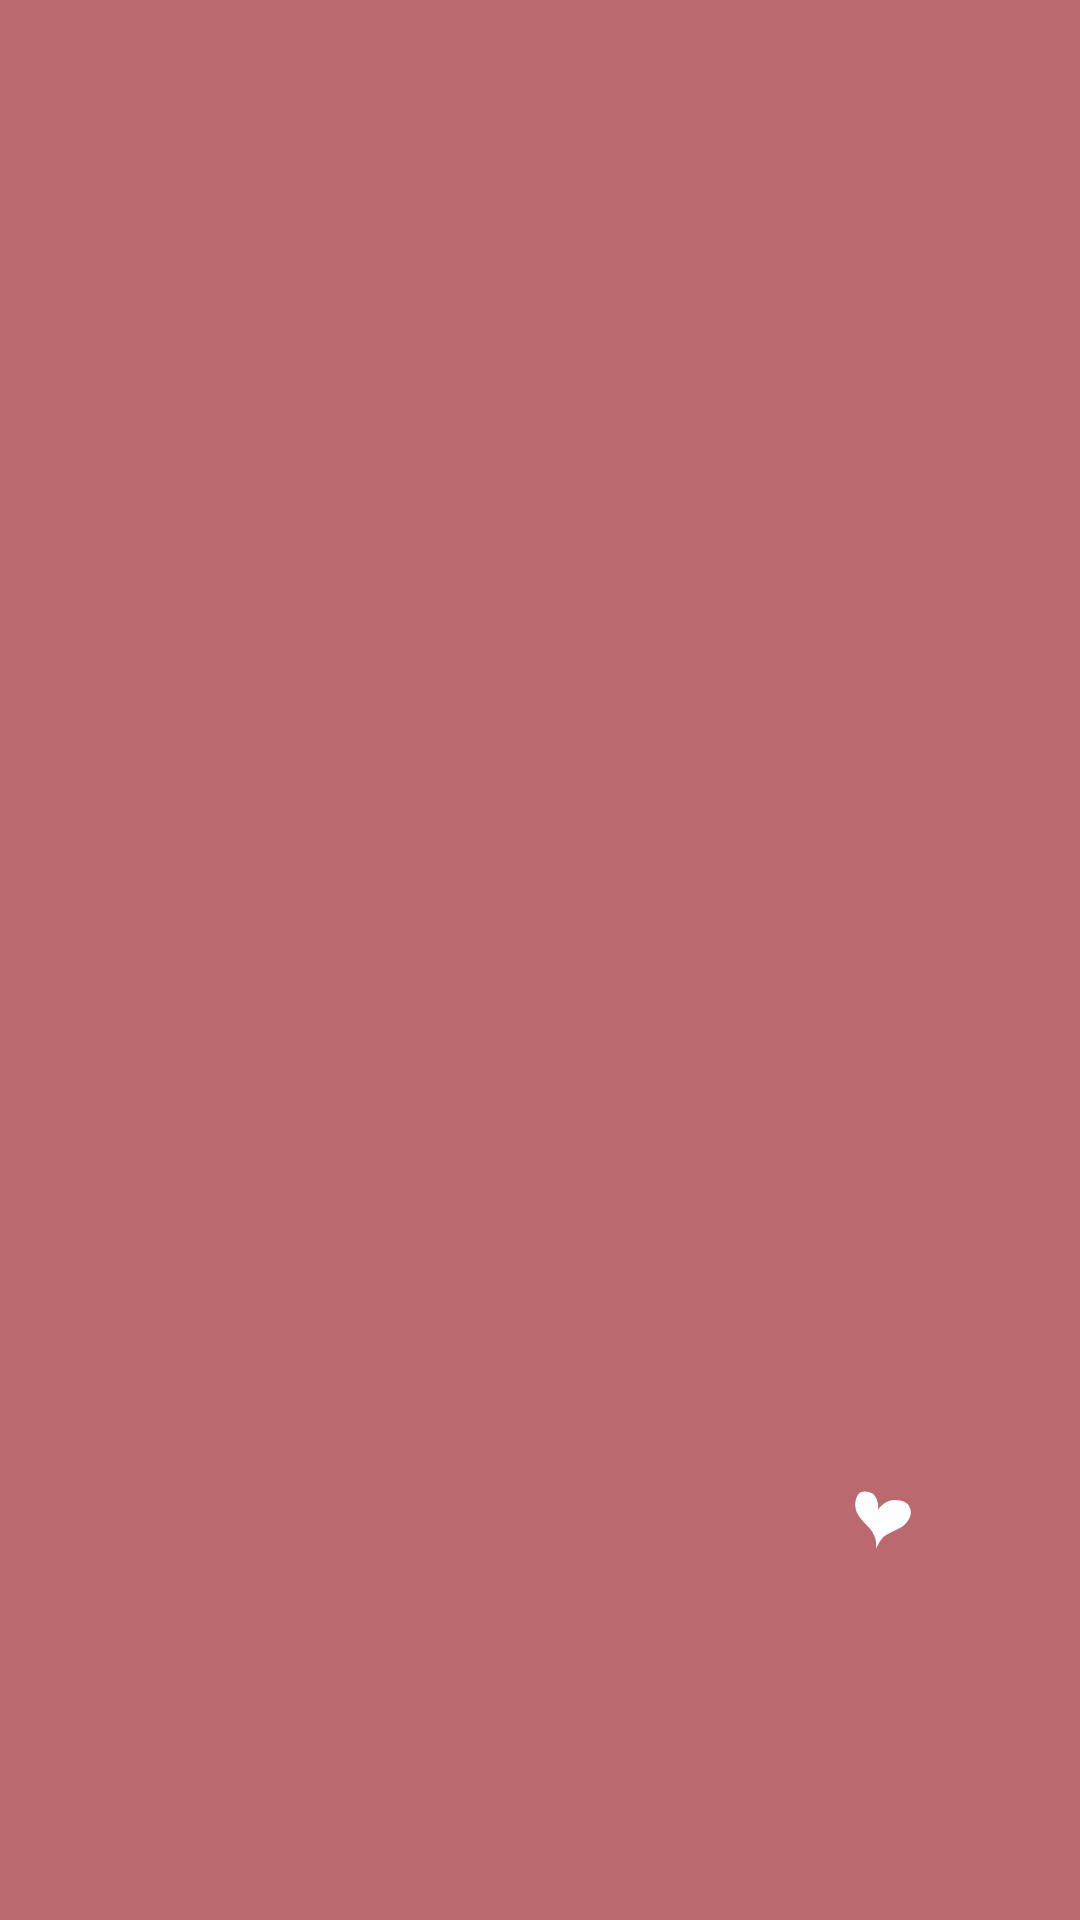 Download Plain Dull Pink Iphone Wallpaper 